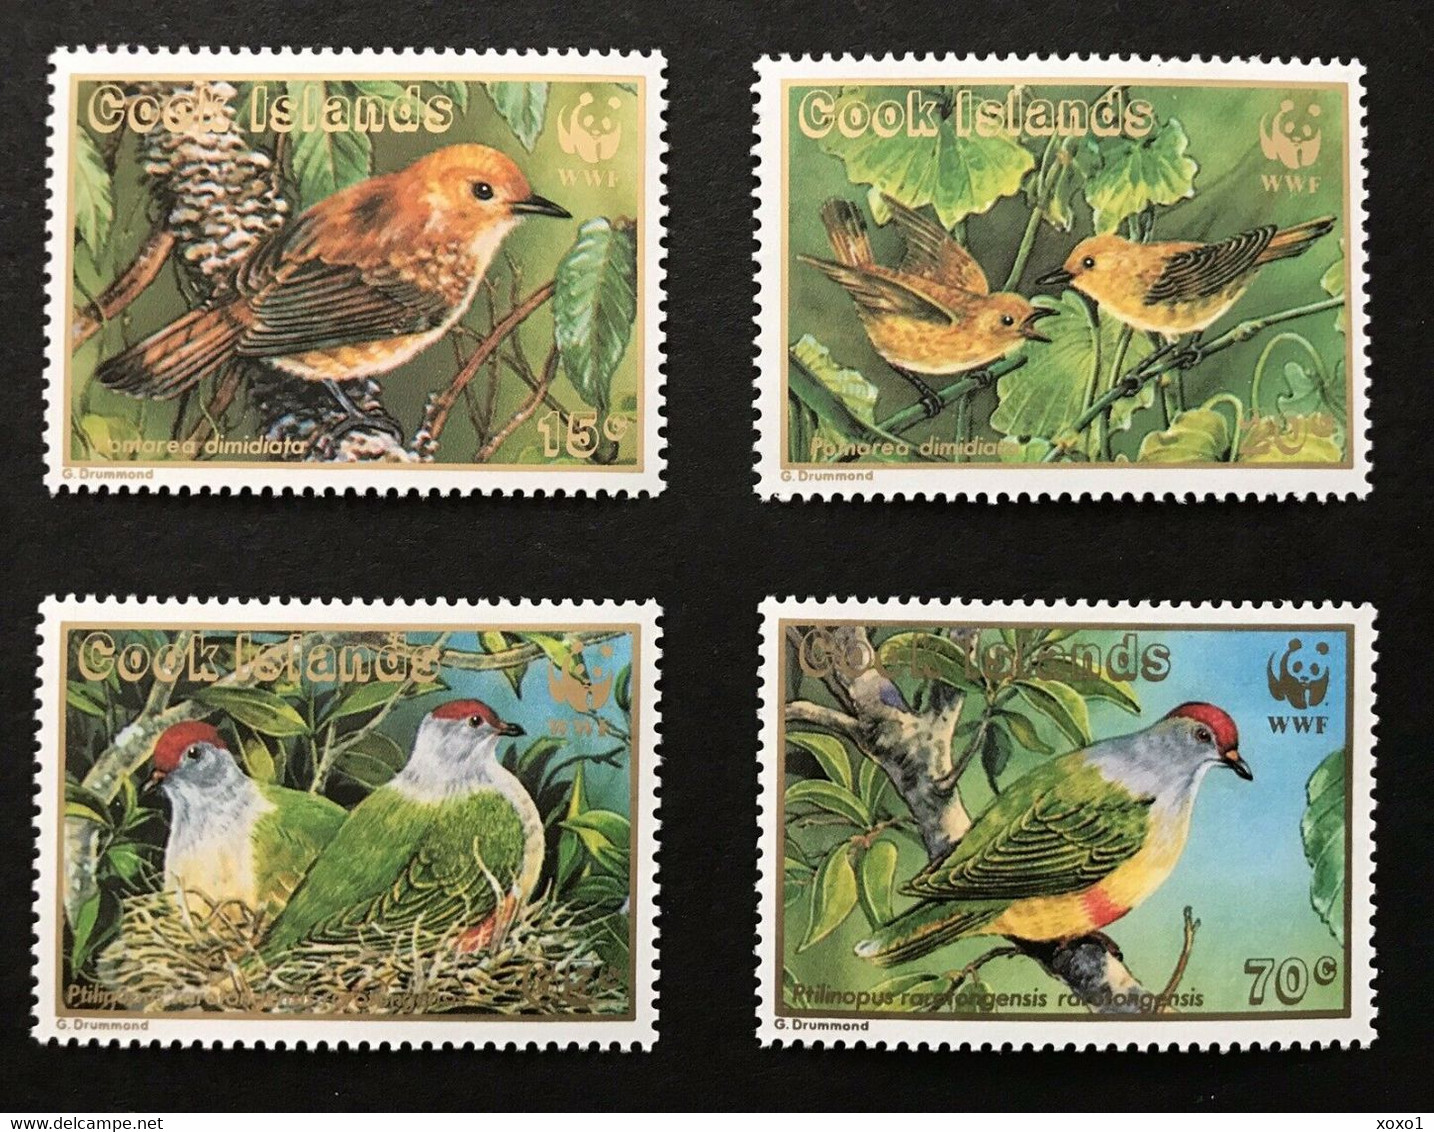 Cook Islands 1989 MiNr. 1278 - 1285 Birds  Rarotonga Monarch , Lilac-crowned Fruit Dove WWF  4v MNH** 15,00 € - Pigeons & Columbiformes